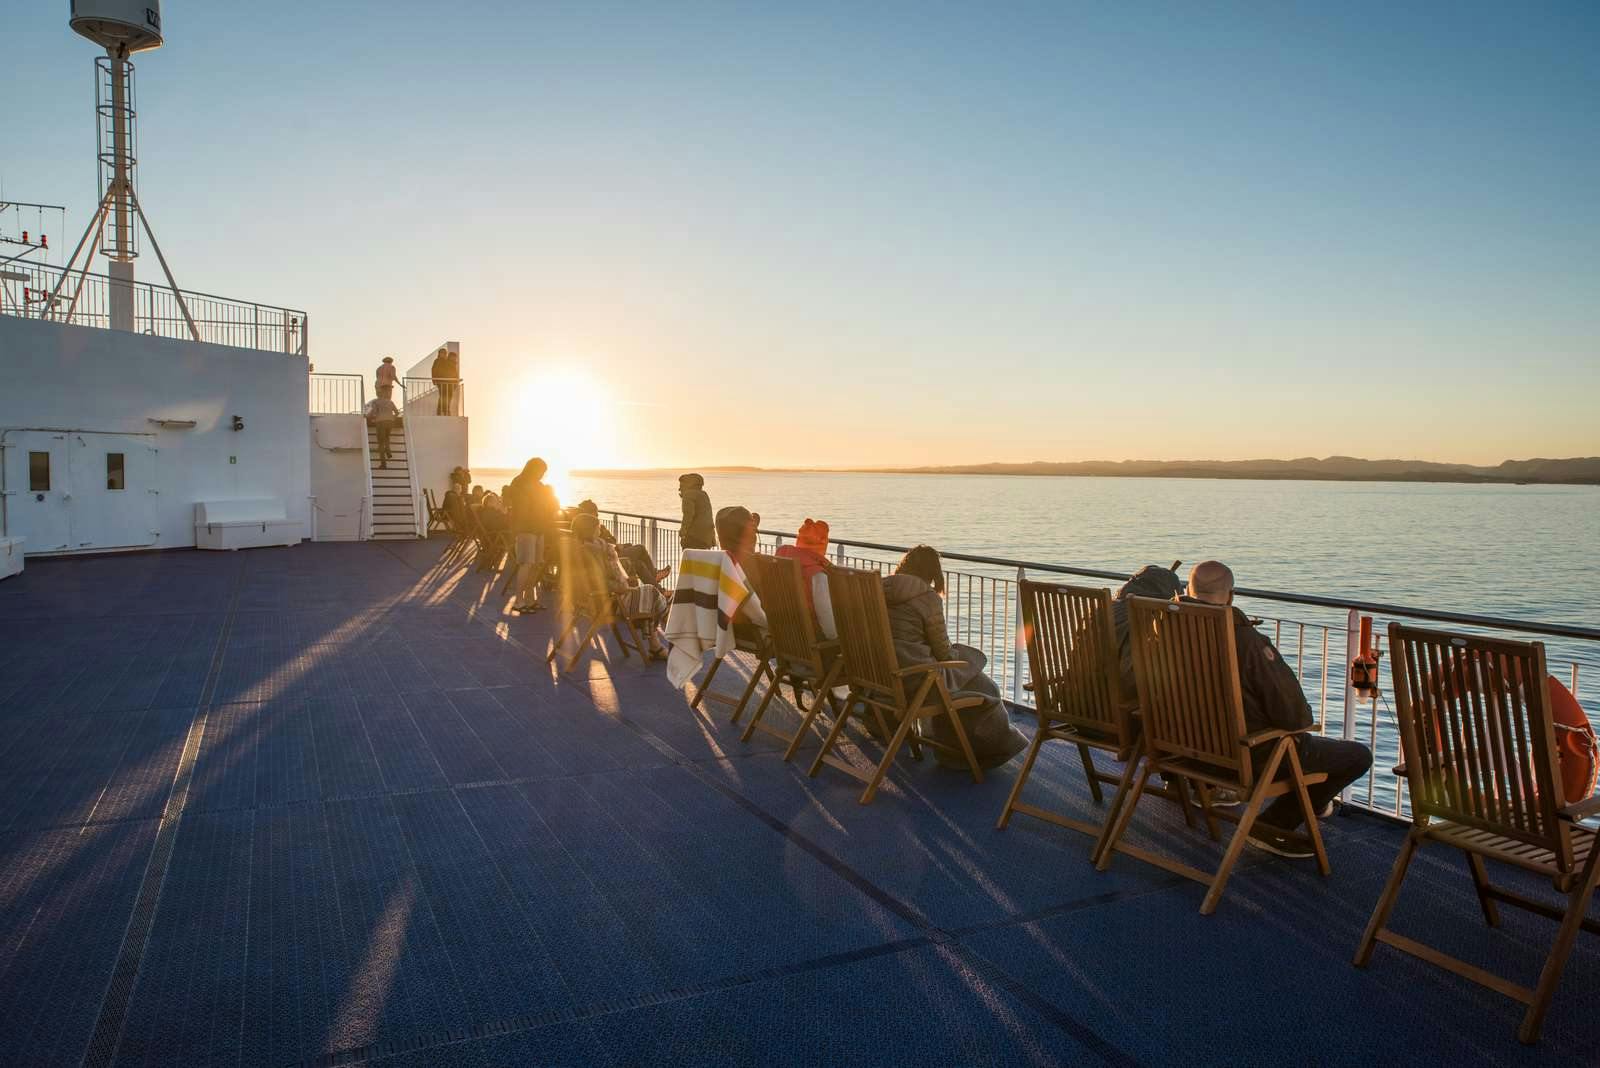 Passengers on deck of the Norröna